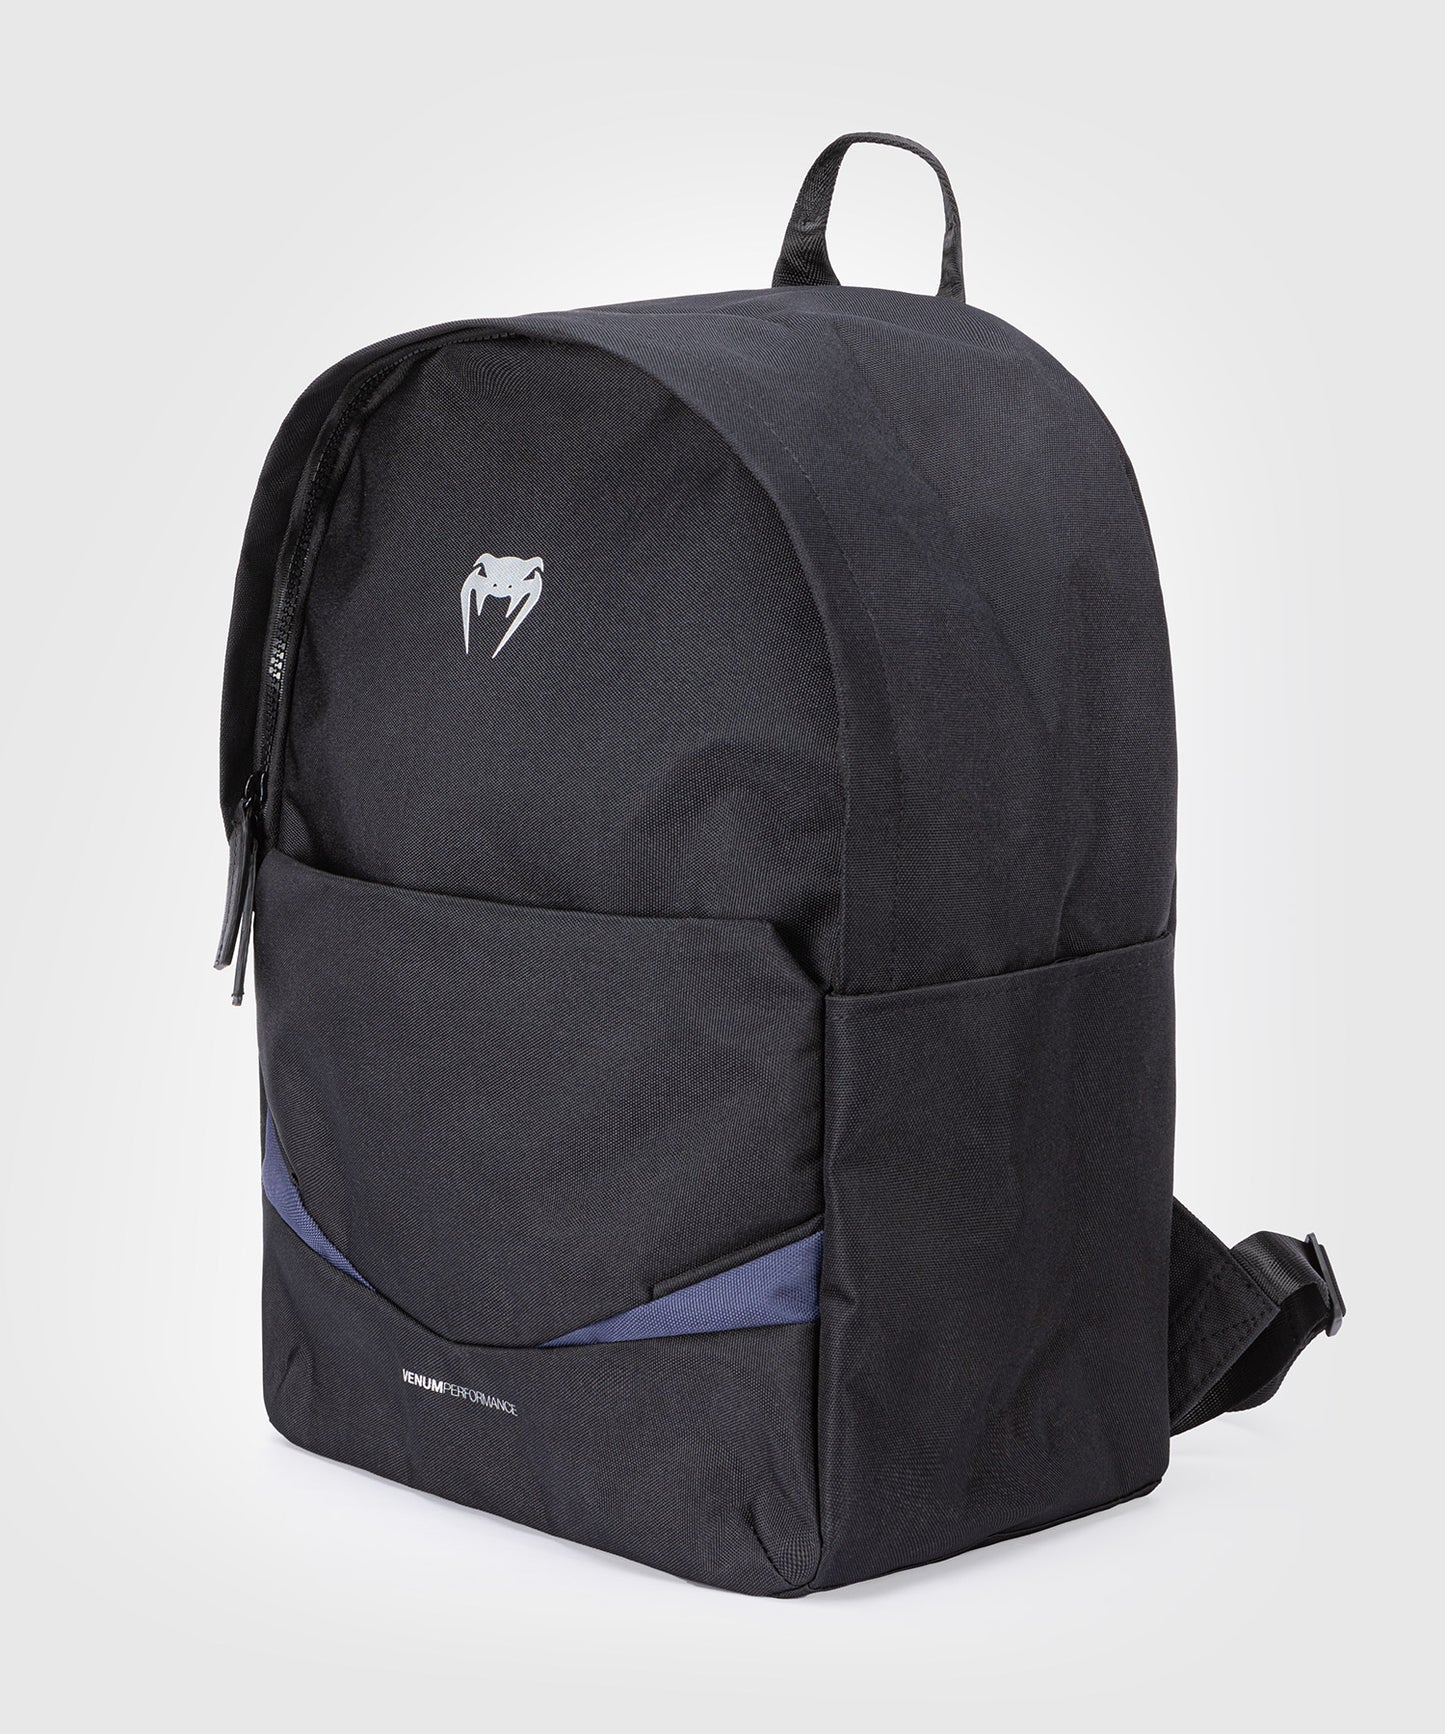 Venum Evo 2 Light Backpack - Black/Blue